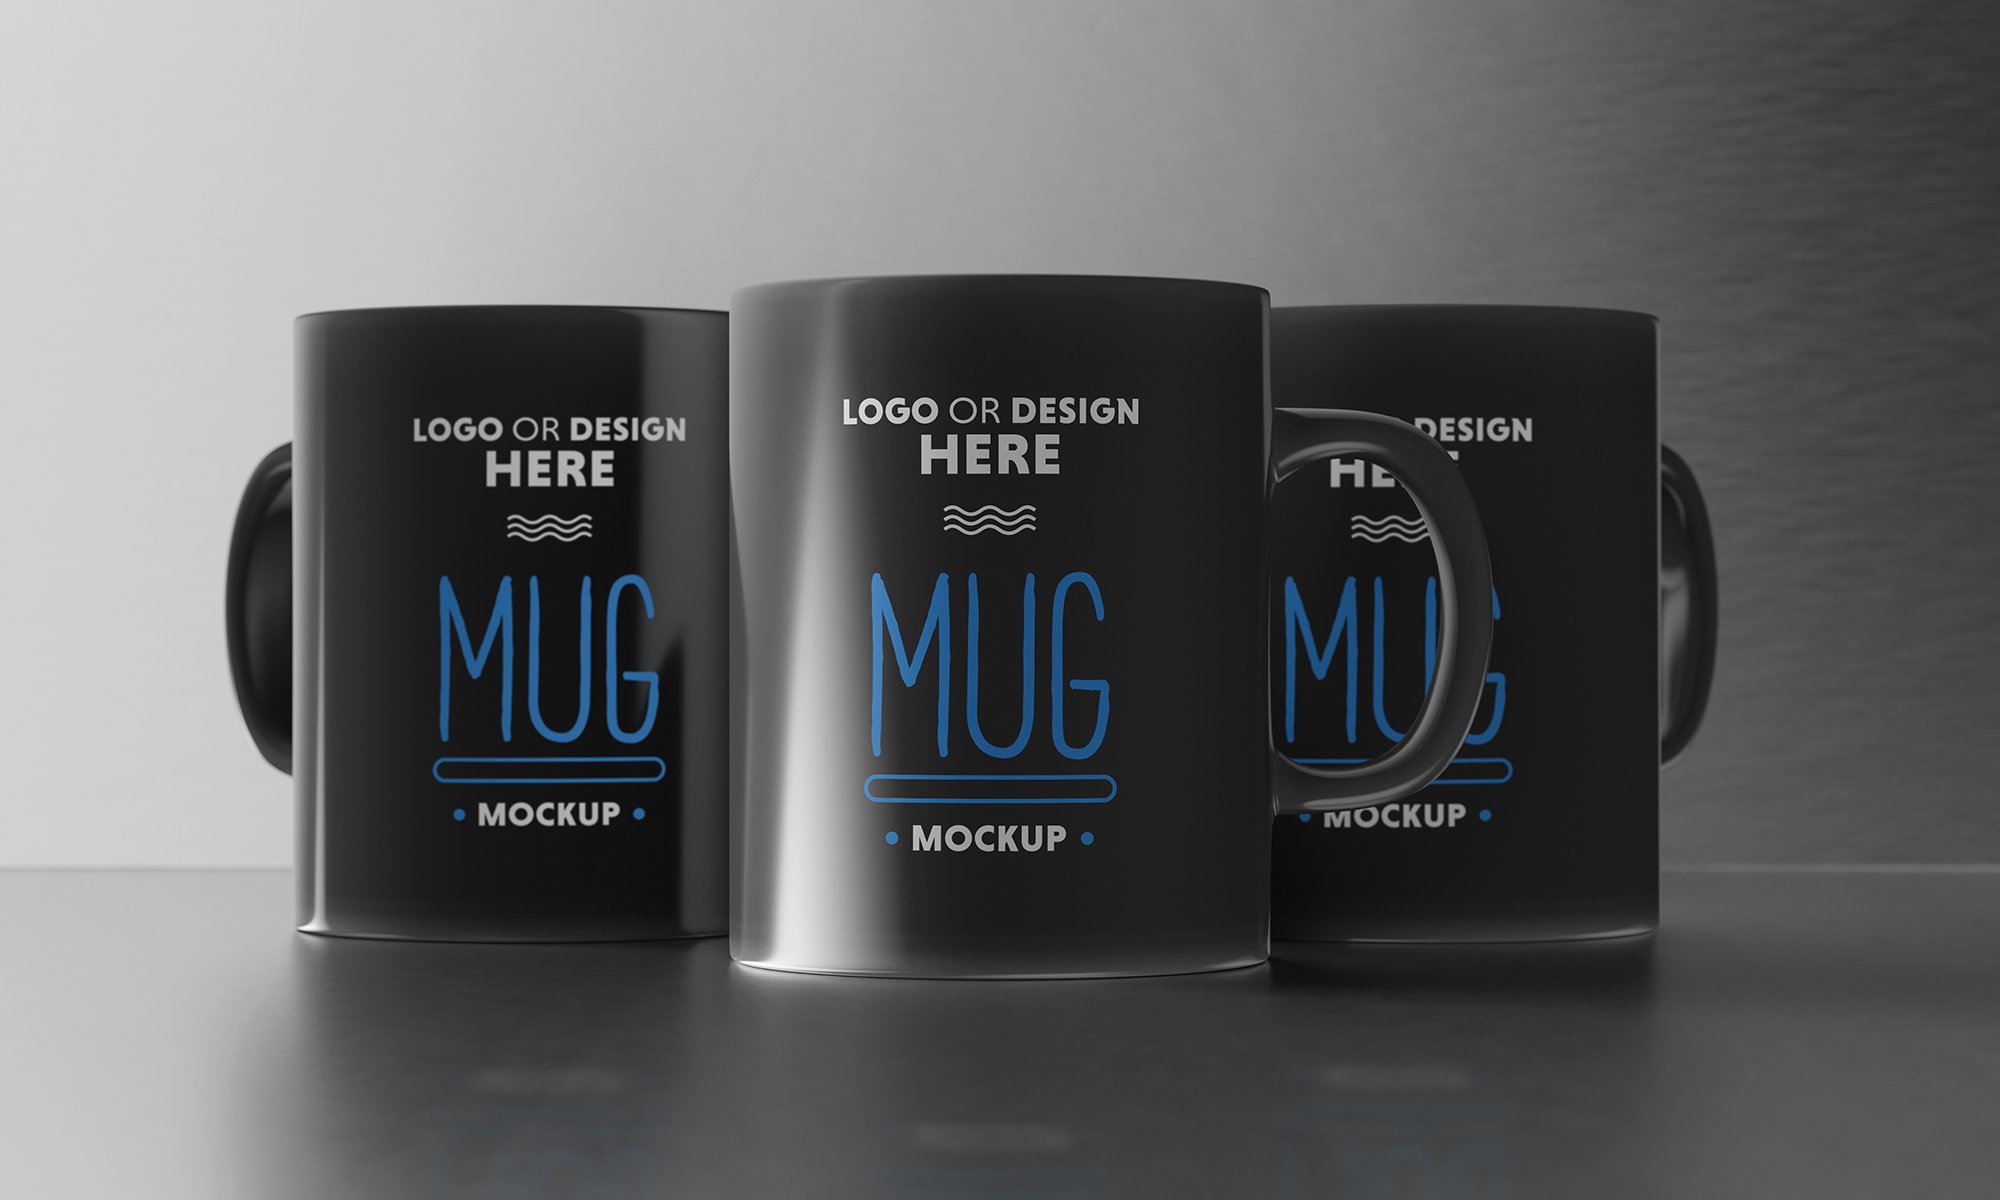 Black Ceramic Coffee Mug Mockup cover image.